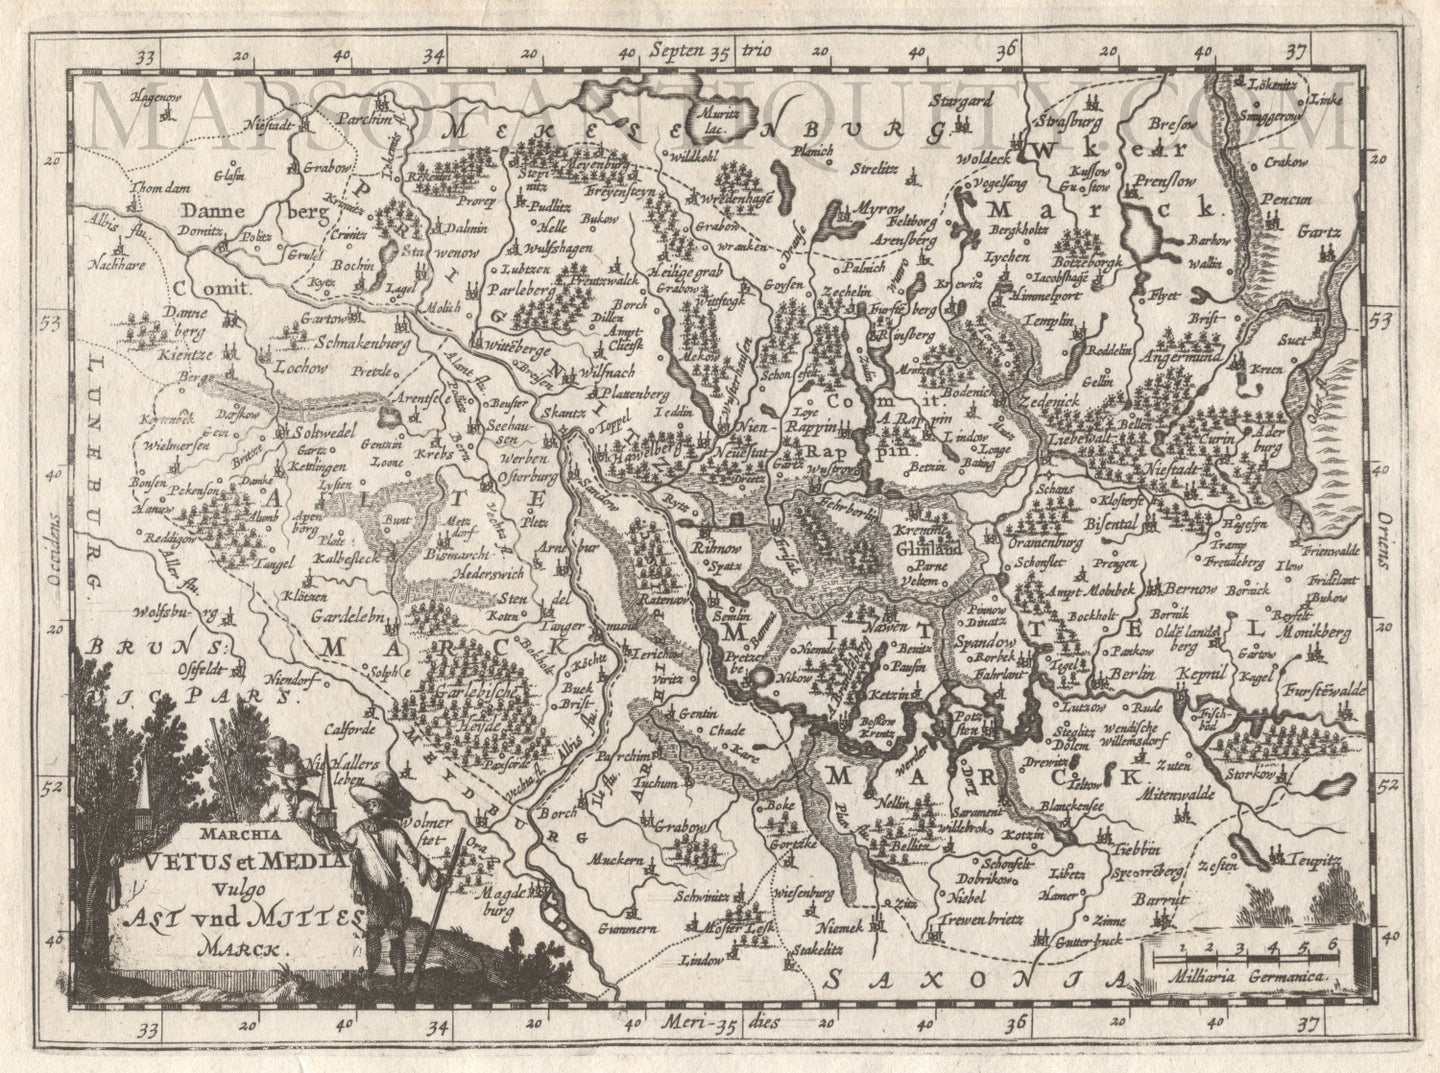 Black-and-white-antique-map-Marchia-Vetus-et-Media-Vulgo-Alt-und-Mittel-Marck-Germany-Europe-Germany-1676-Waesberge-Maps-Of-Antiquity